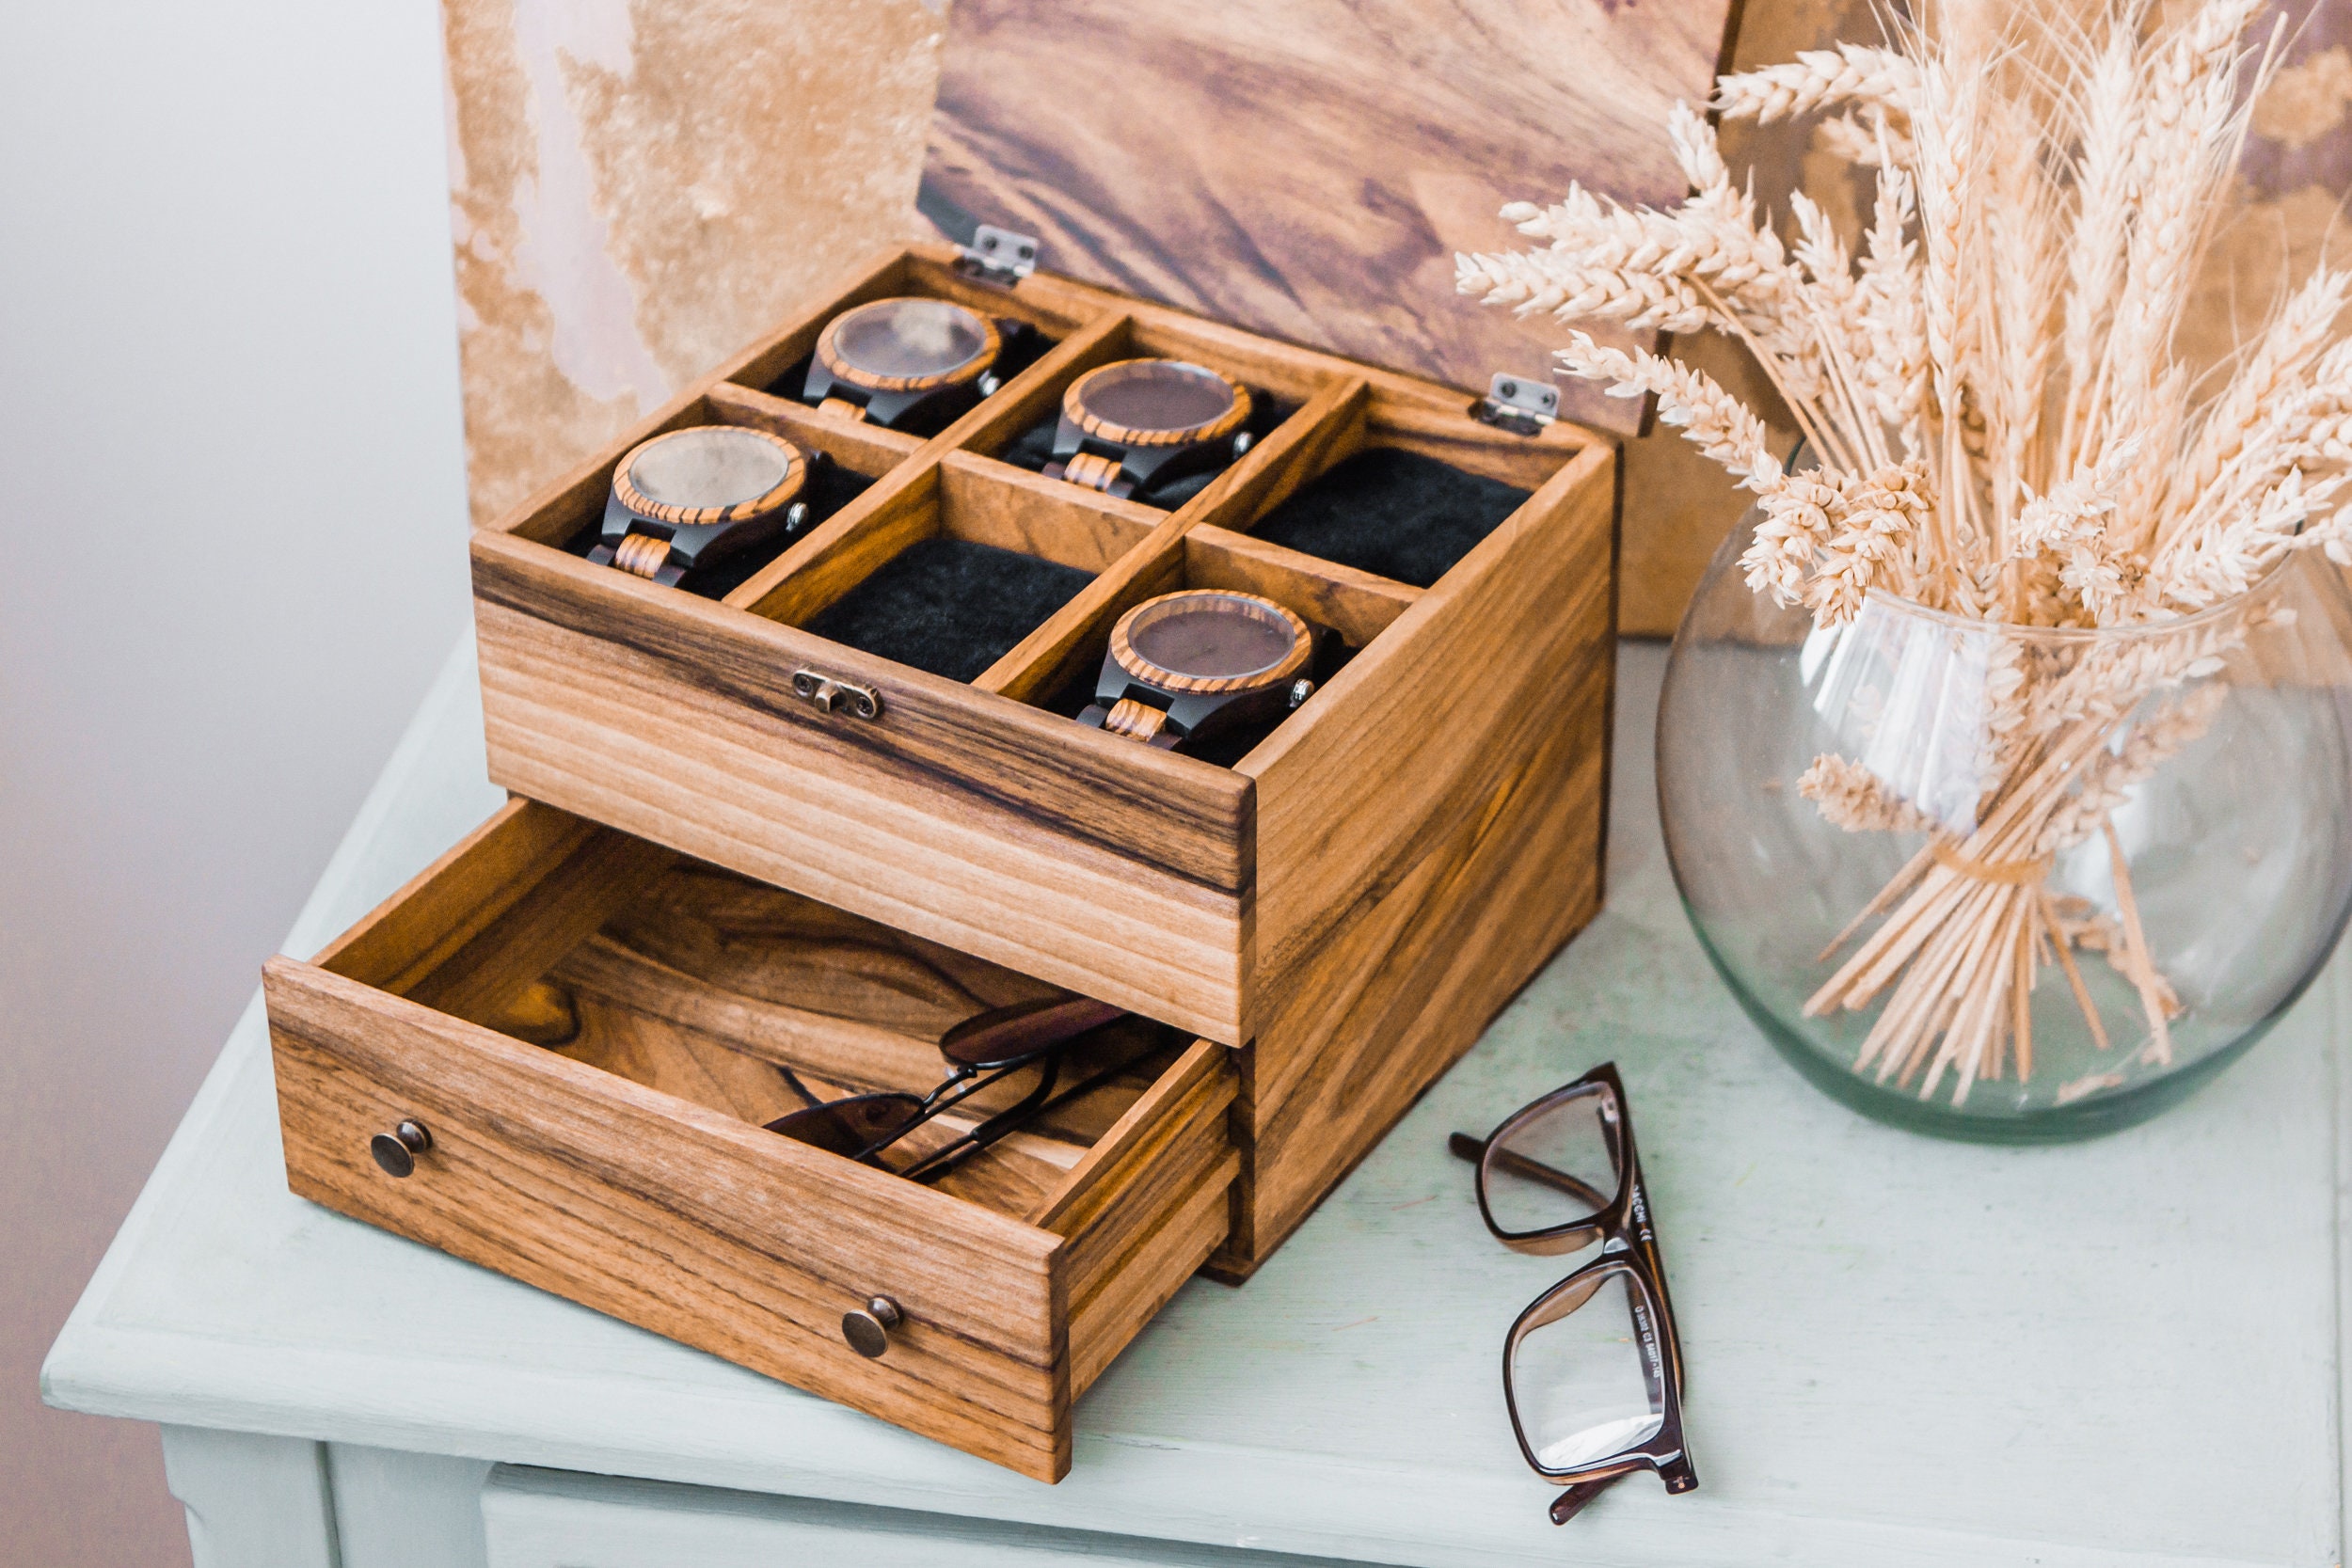 Watch Box Case & Mens Jewelry Box Organizer with 3 Sunglasses Display Box